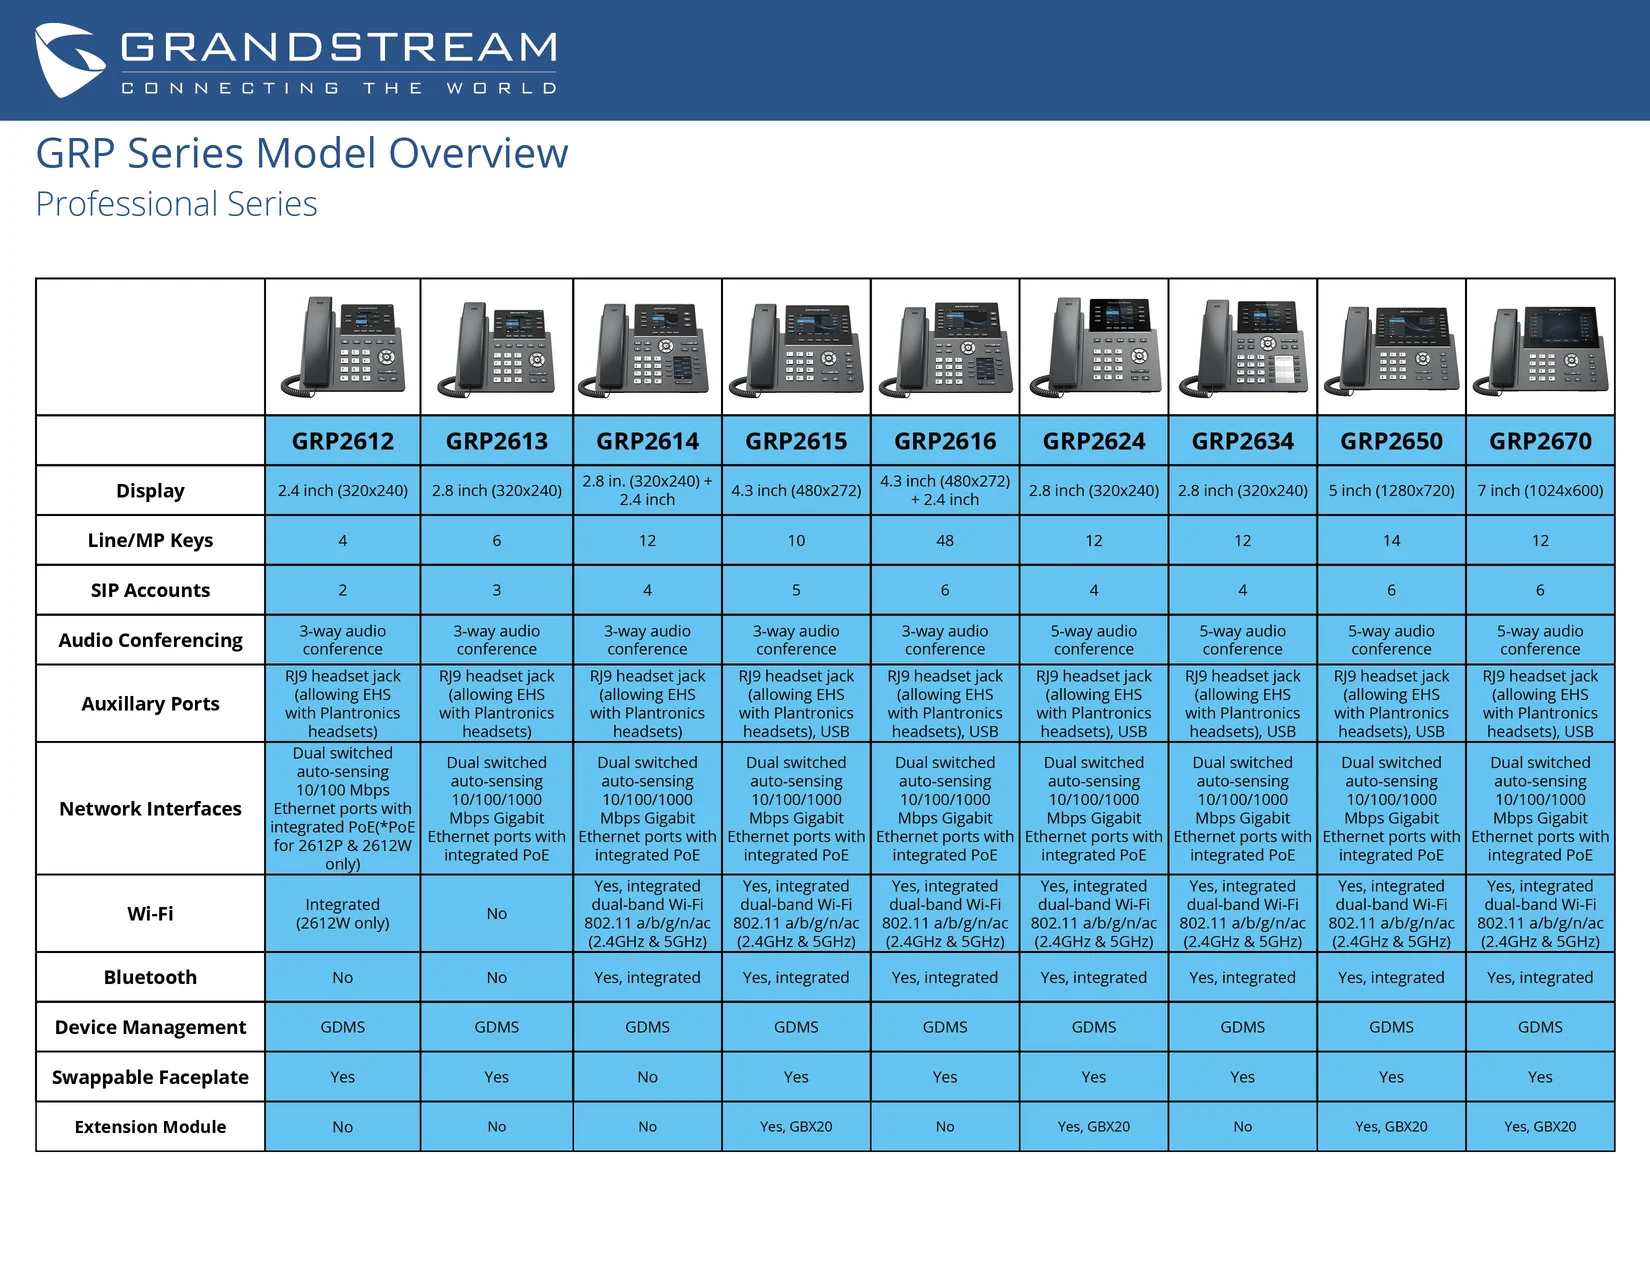 GRP Series Grandstream Cuadro Comparativo Essential Comparison GRP261x y GRP262x CASTelecom